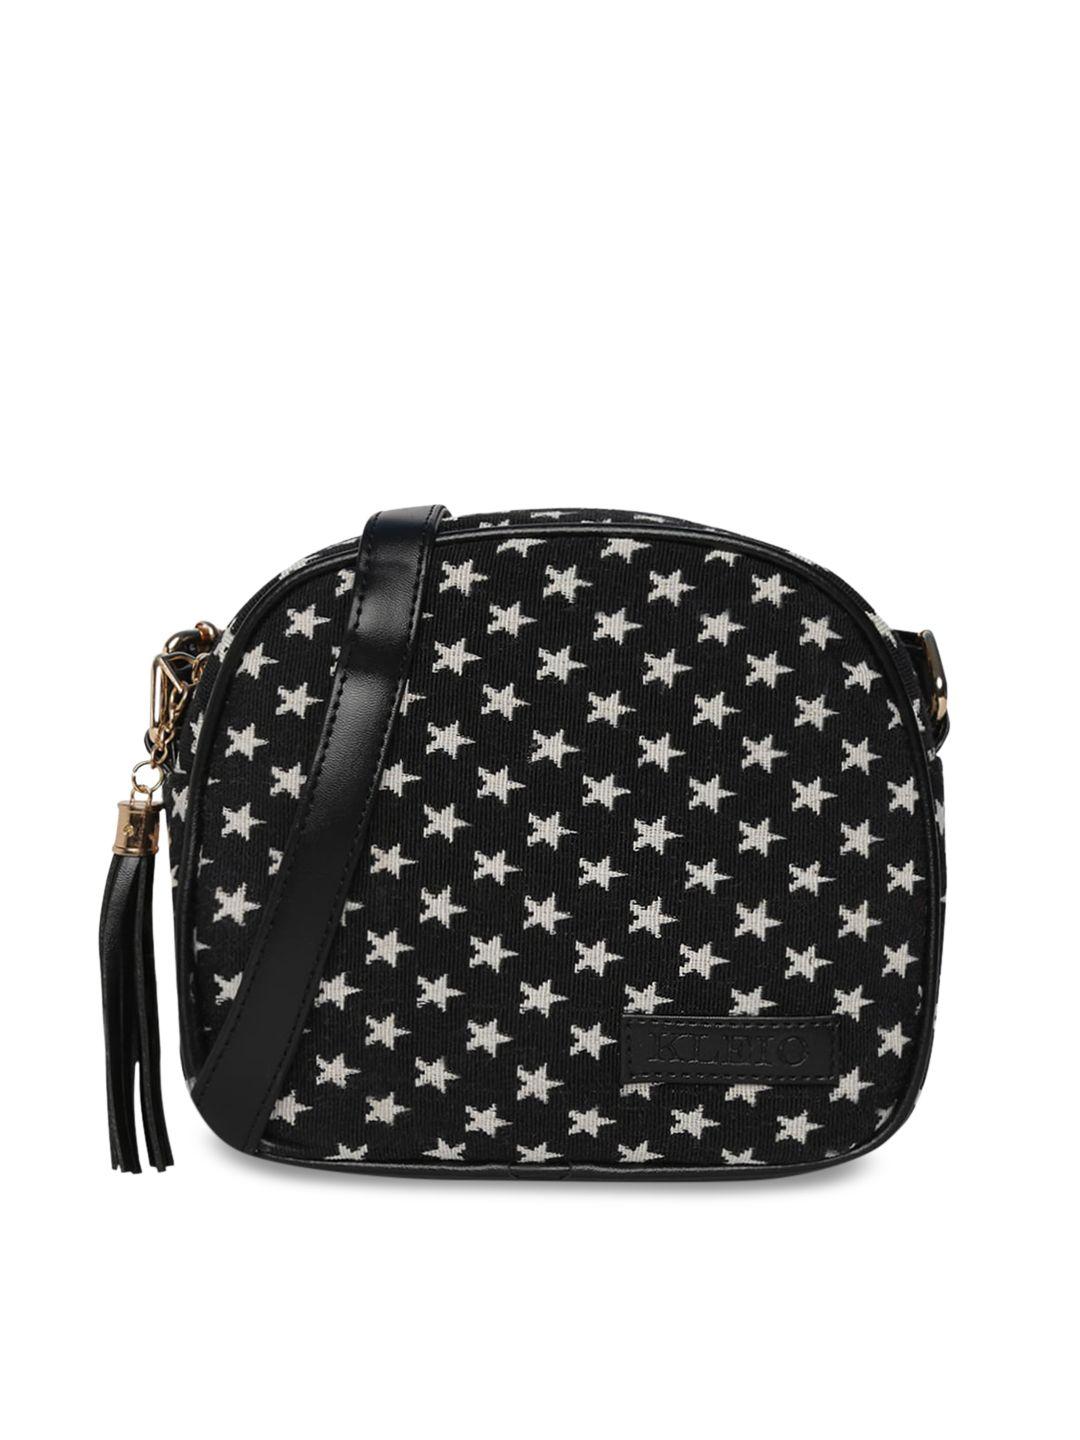 kleio black geometric printed structured sling bag with tasselled